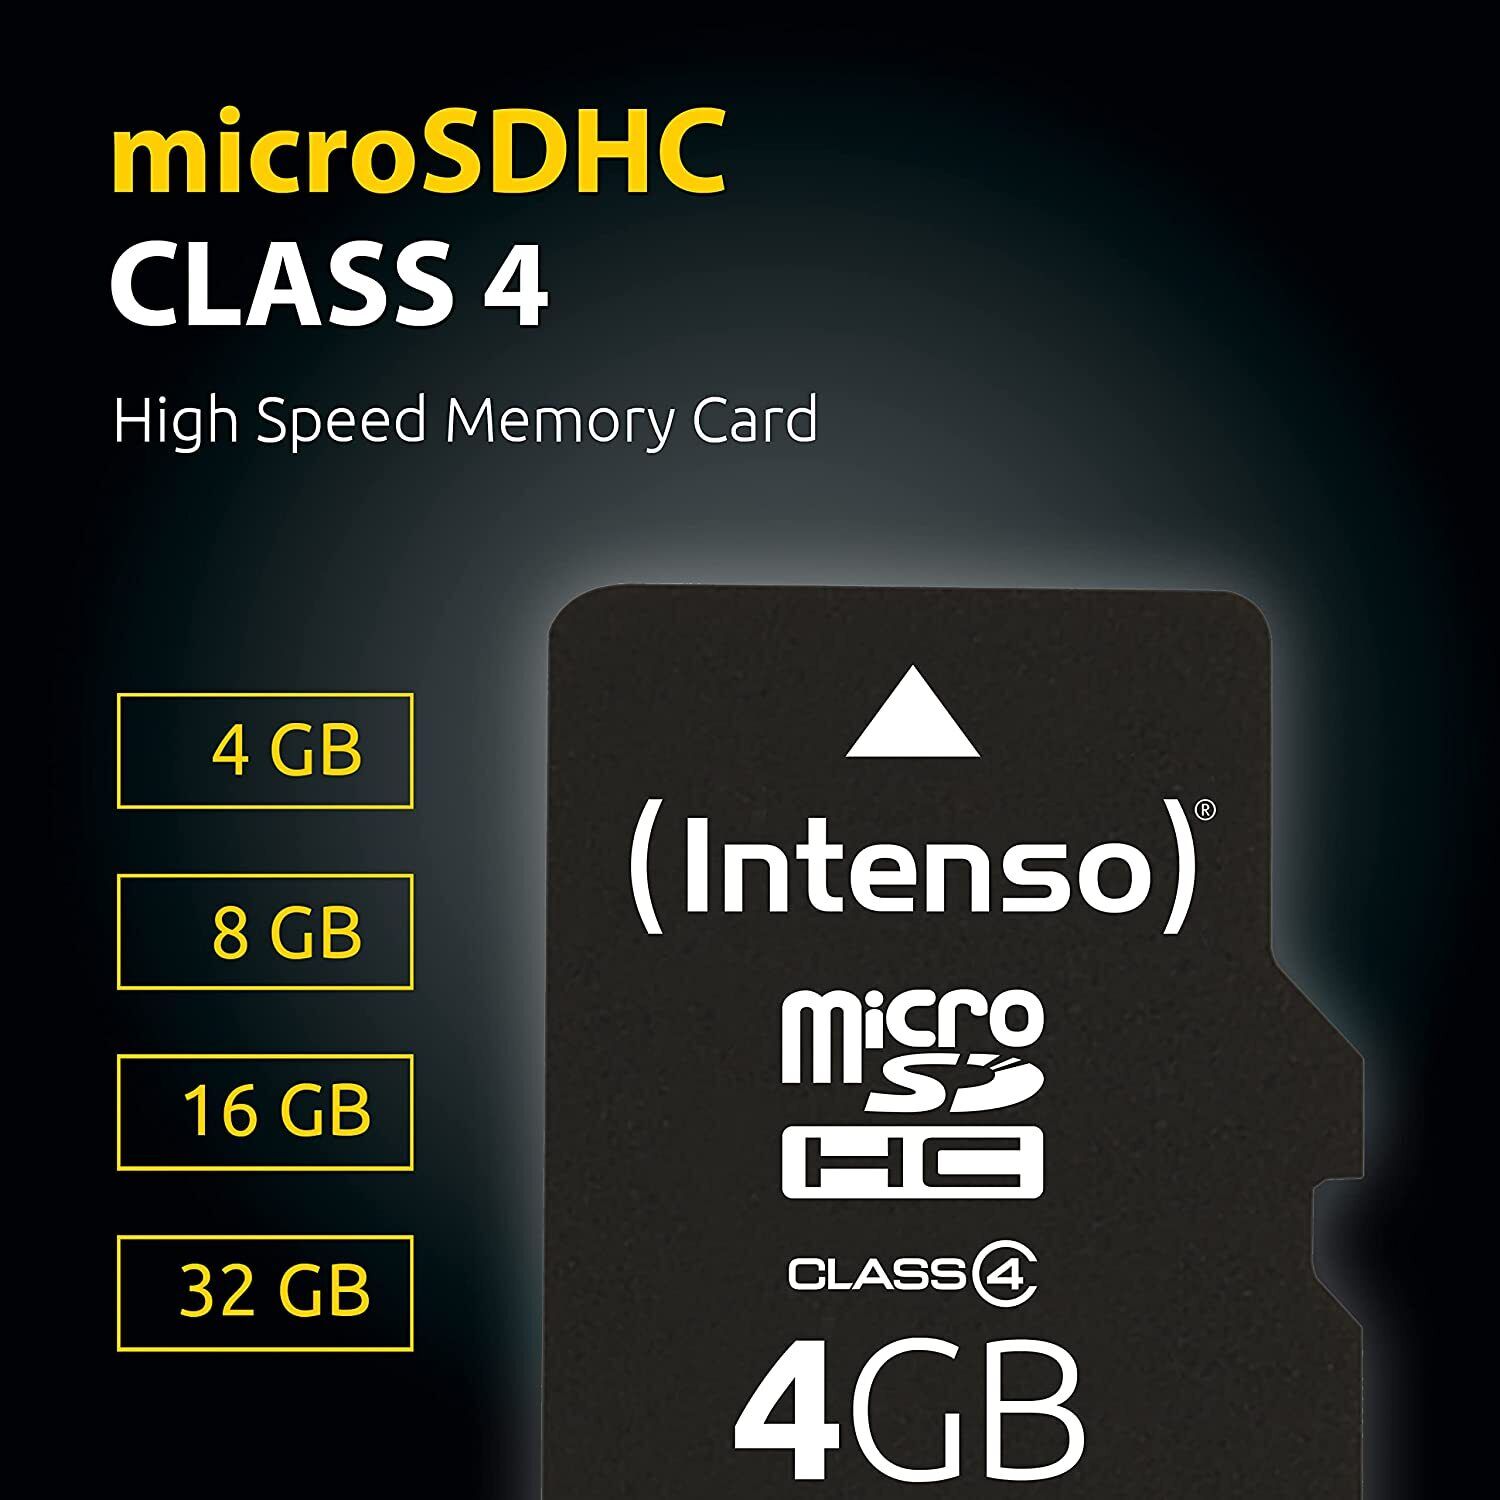 Intenso microSDHC 32GB Class 4 Speicherkarte inkl. SD-Adapter, schwarz